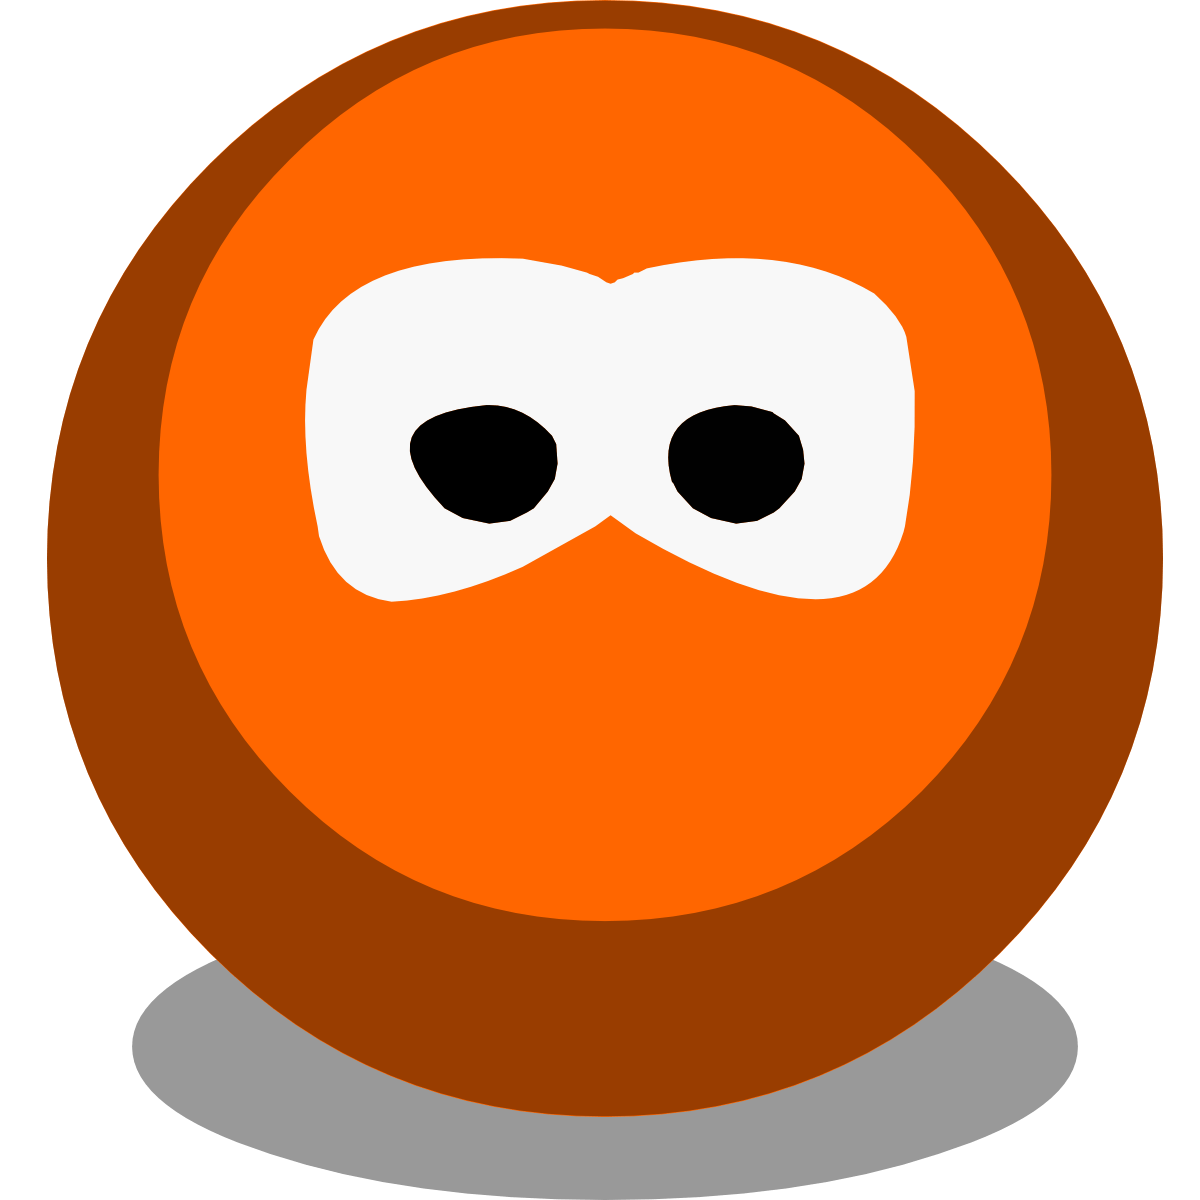 Penguin in Orange Circle Logo - Orange | Club Penguin Wiki | FANDOM powered by Wikia